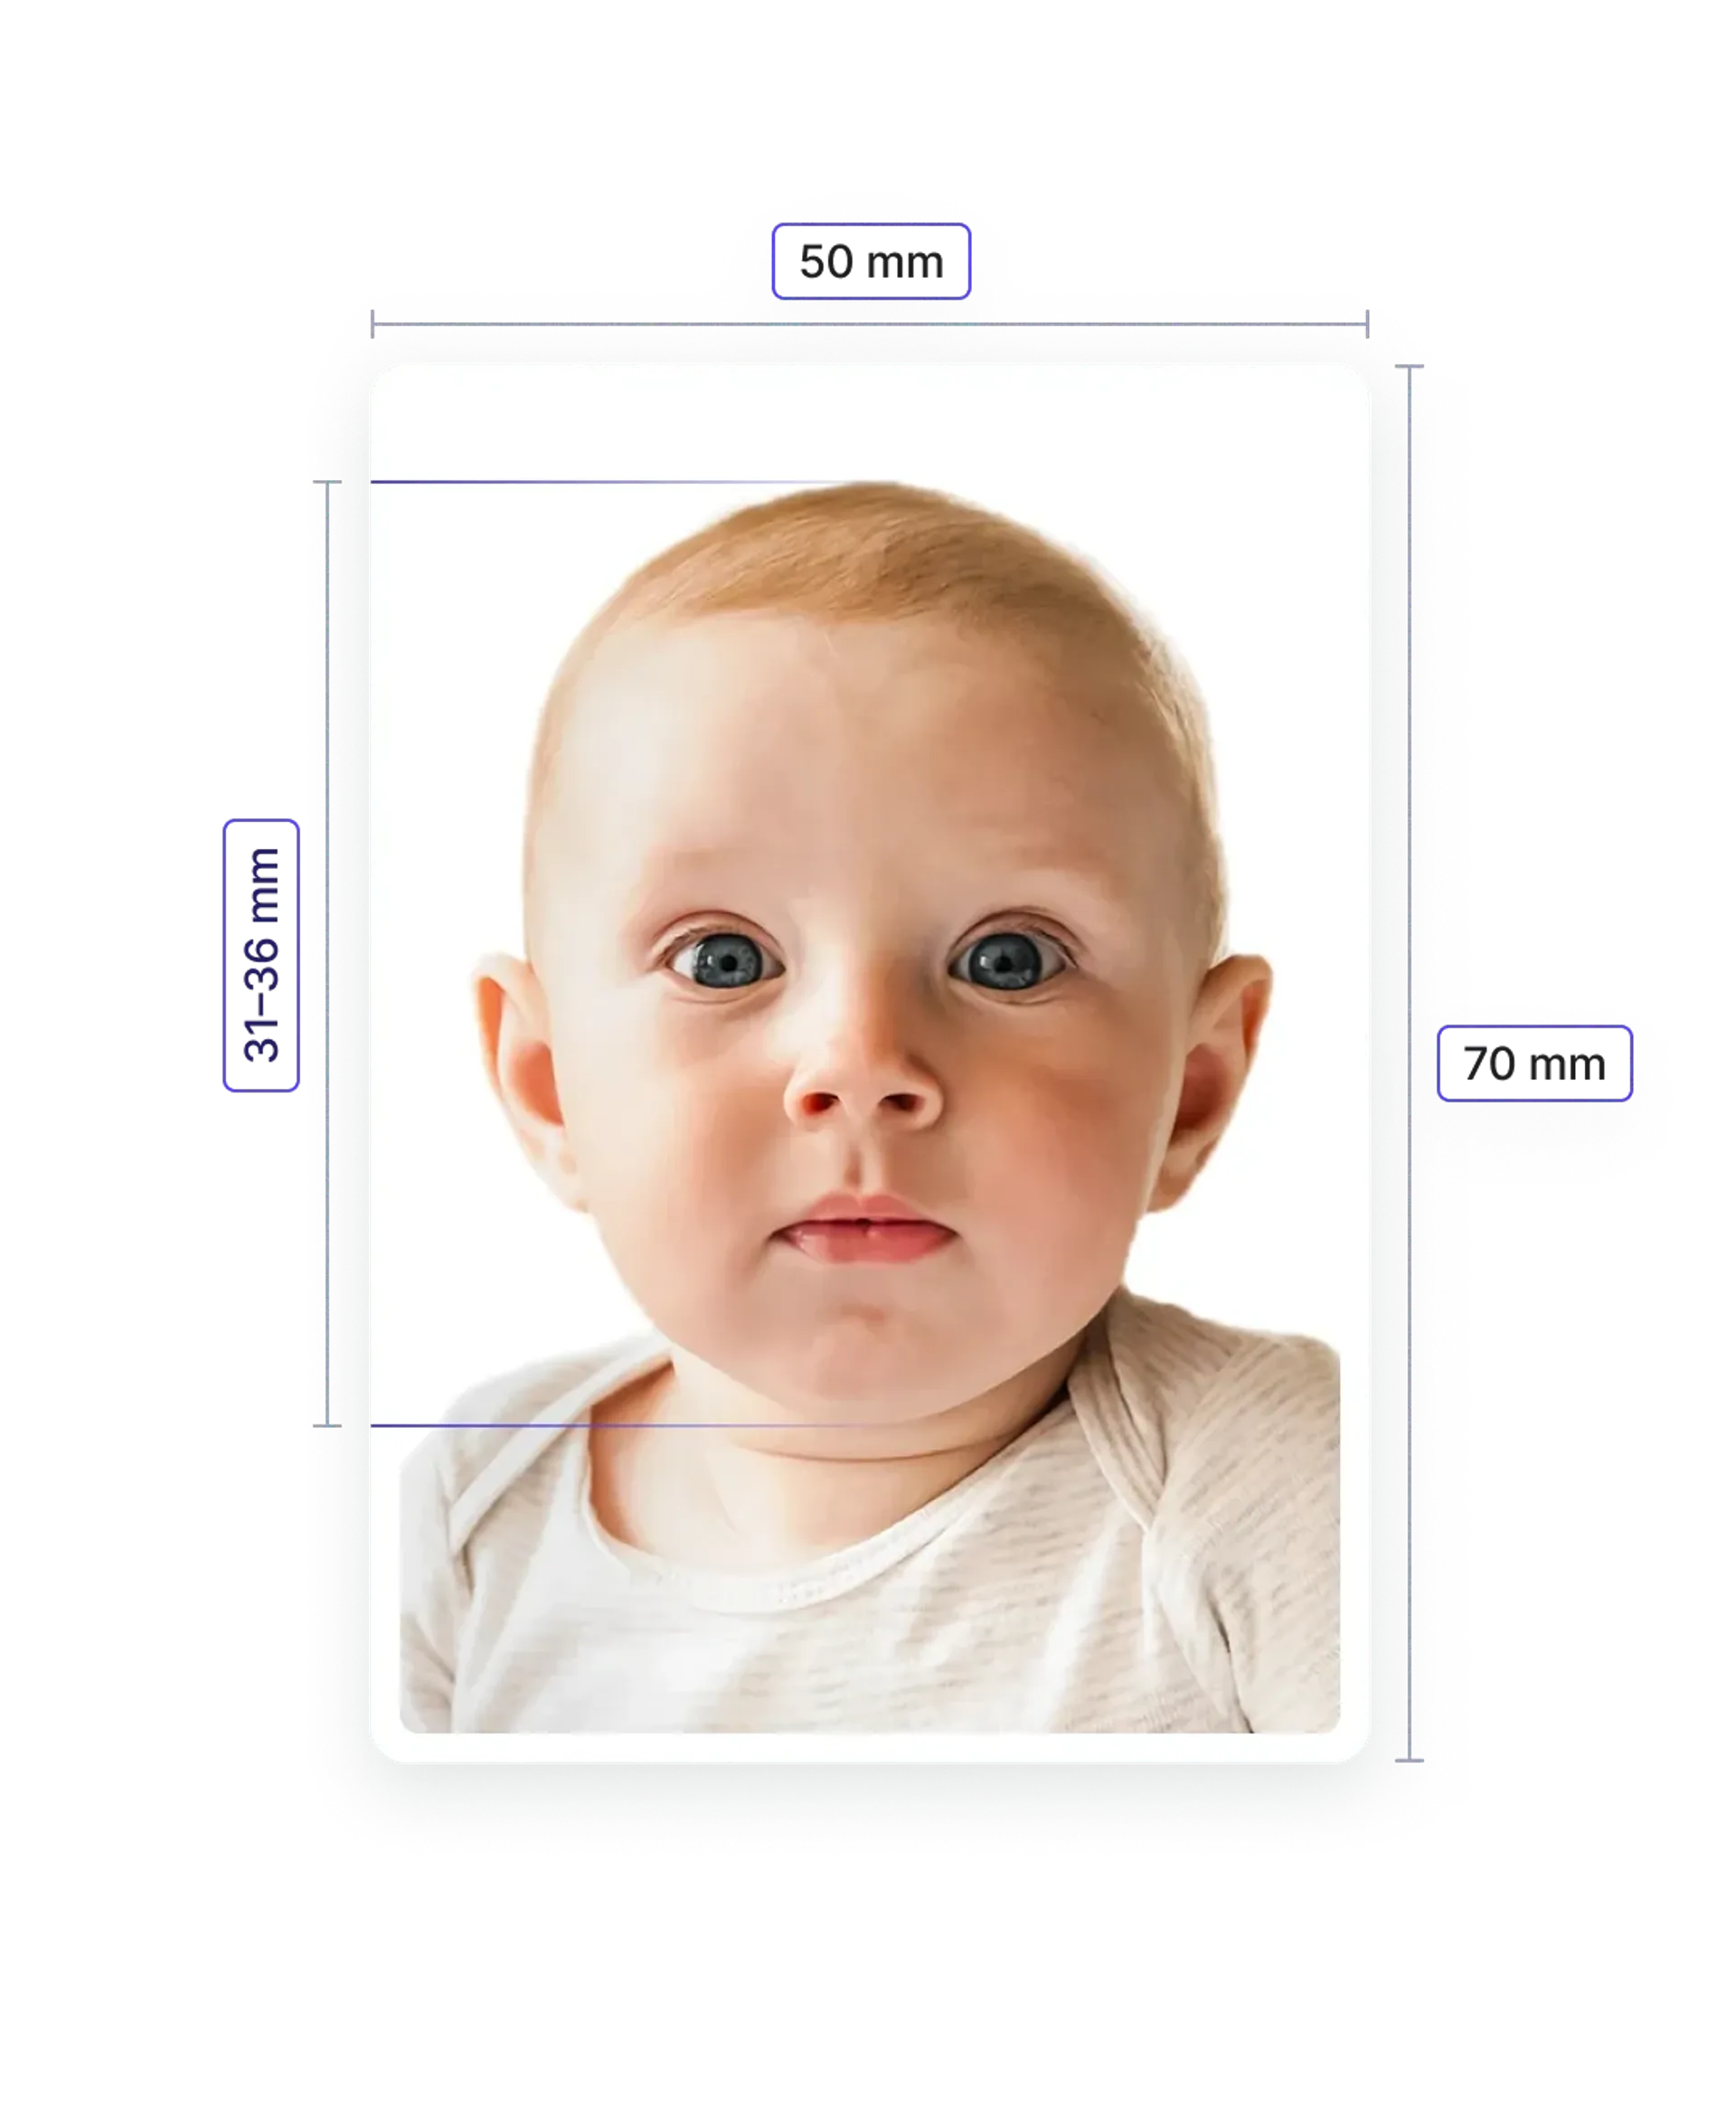 Baby Passport Photos Specifications